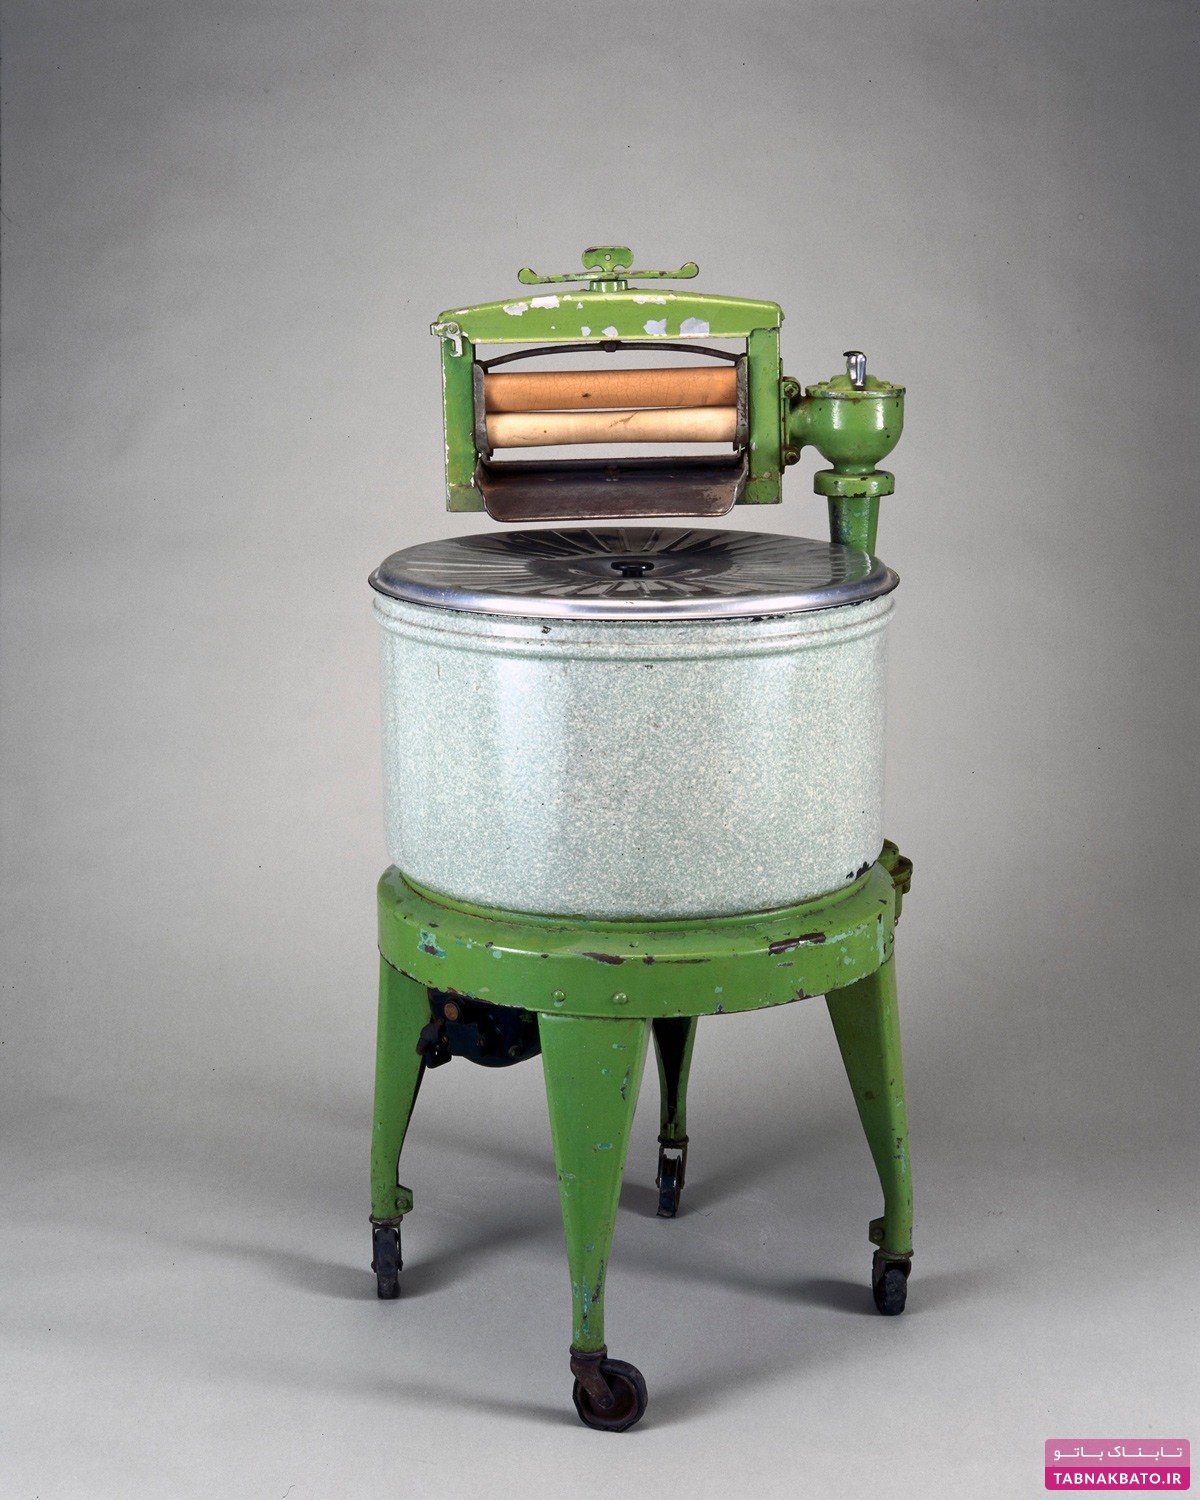 Как менялась стиральная машина. Стиральная машина Thor 1908. Алва Фишер стиральная машина. Первая стиральная машина Алва Фишер. Уильям Блэкстоун первая стиральная машина.